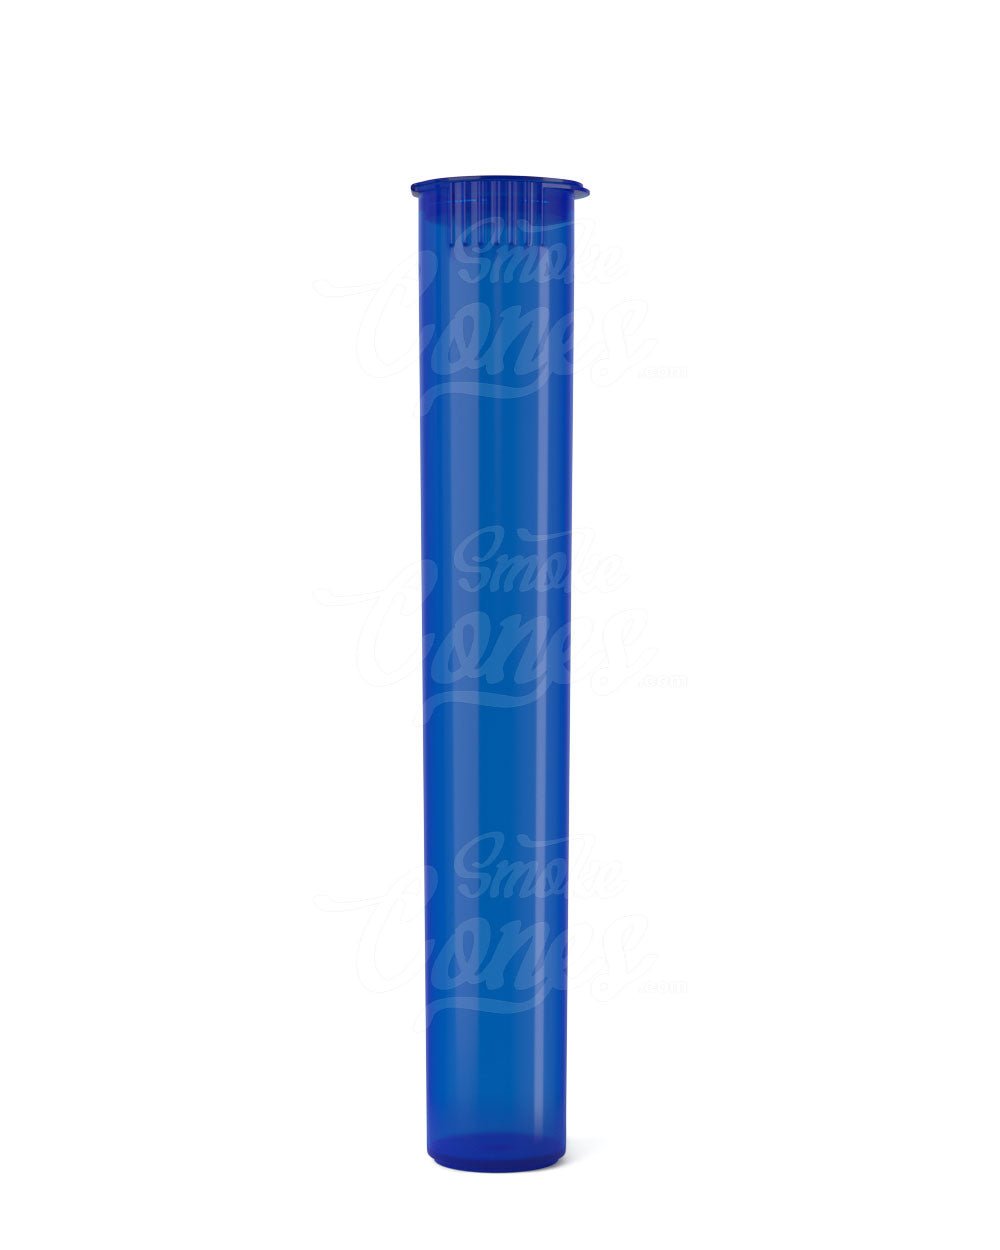 116mm Blue Translucent Child Resistant Pop Top Pre-Roll Tubes 1000/Box - 2